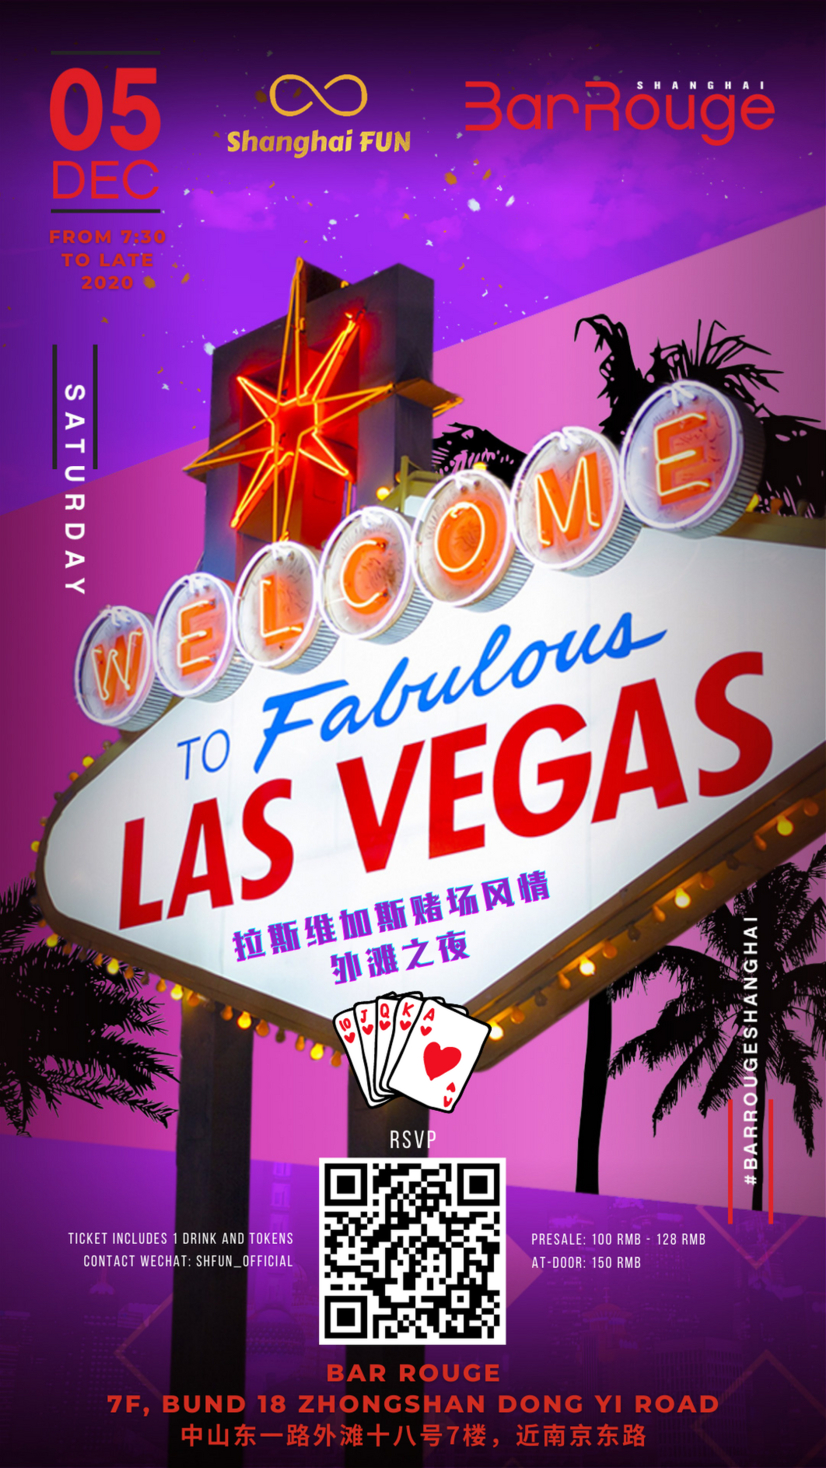 Las Vegas Casino Night On The Bund 拉斯维加斯赌场风情外滩之夜  Saturday, December 5 inside Sunday To 7 Saturday.